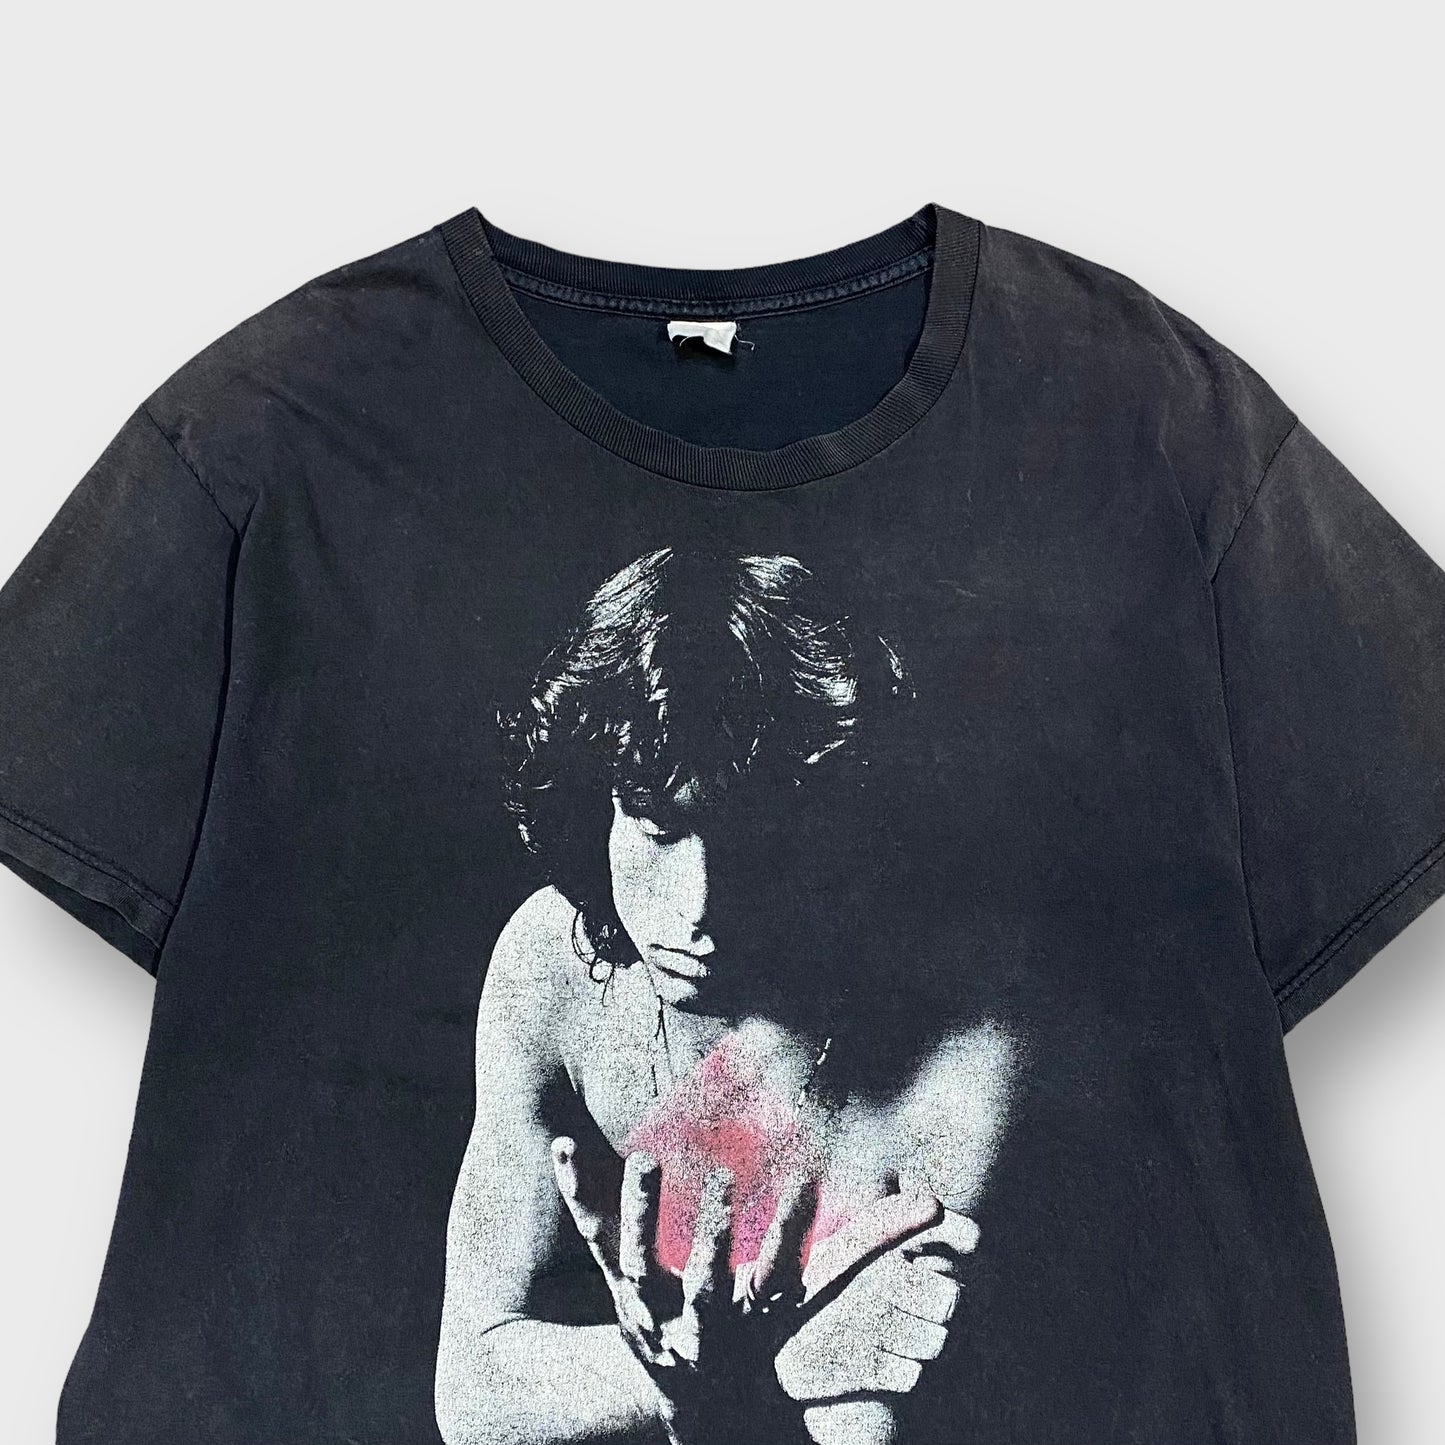 00's "The Doors" Band t-shirt